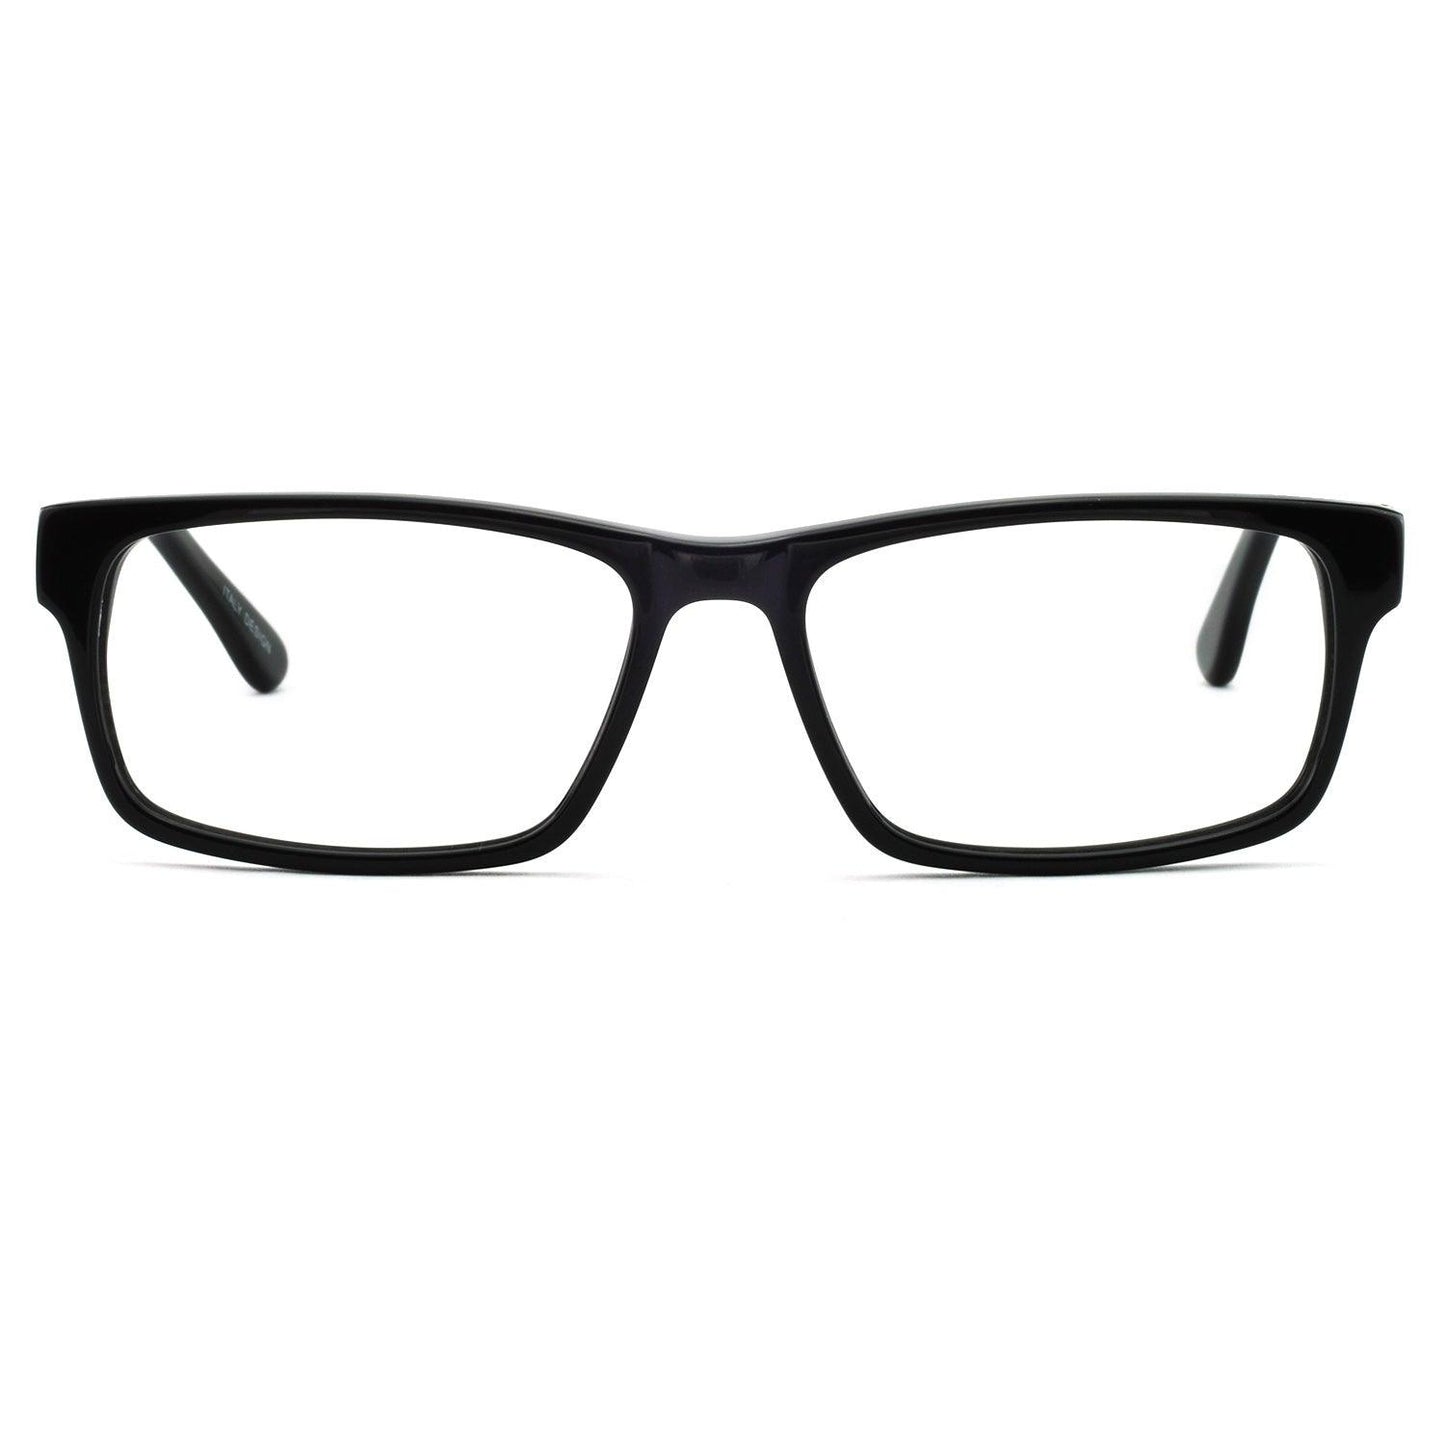 Men Fashion Black Rectangle Eyewear Frame With Prescription Clear Lens - Occichiari 